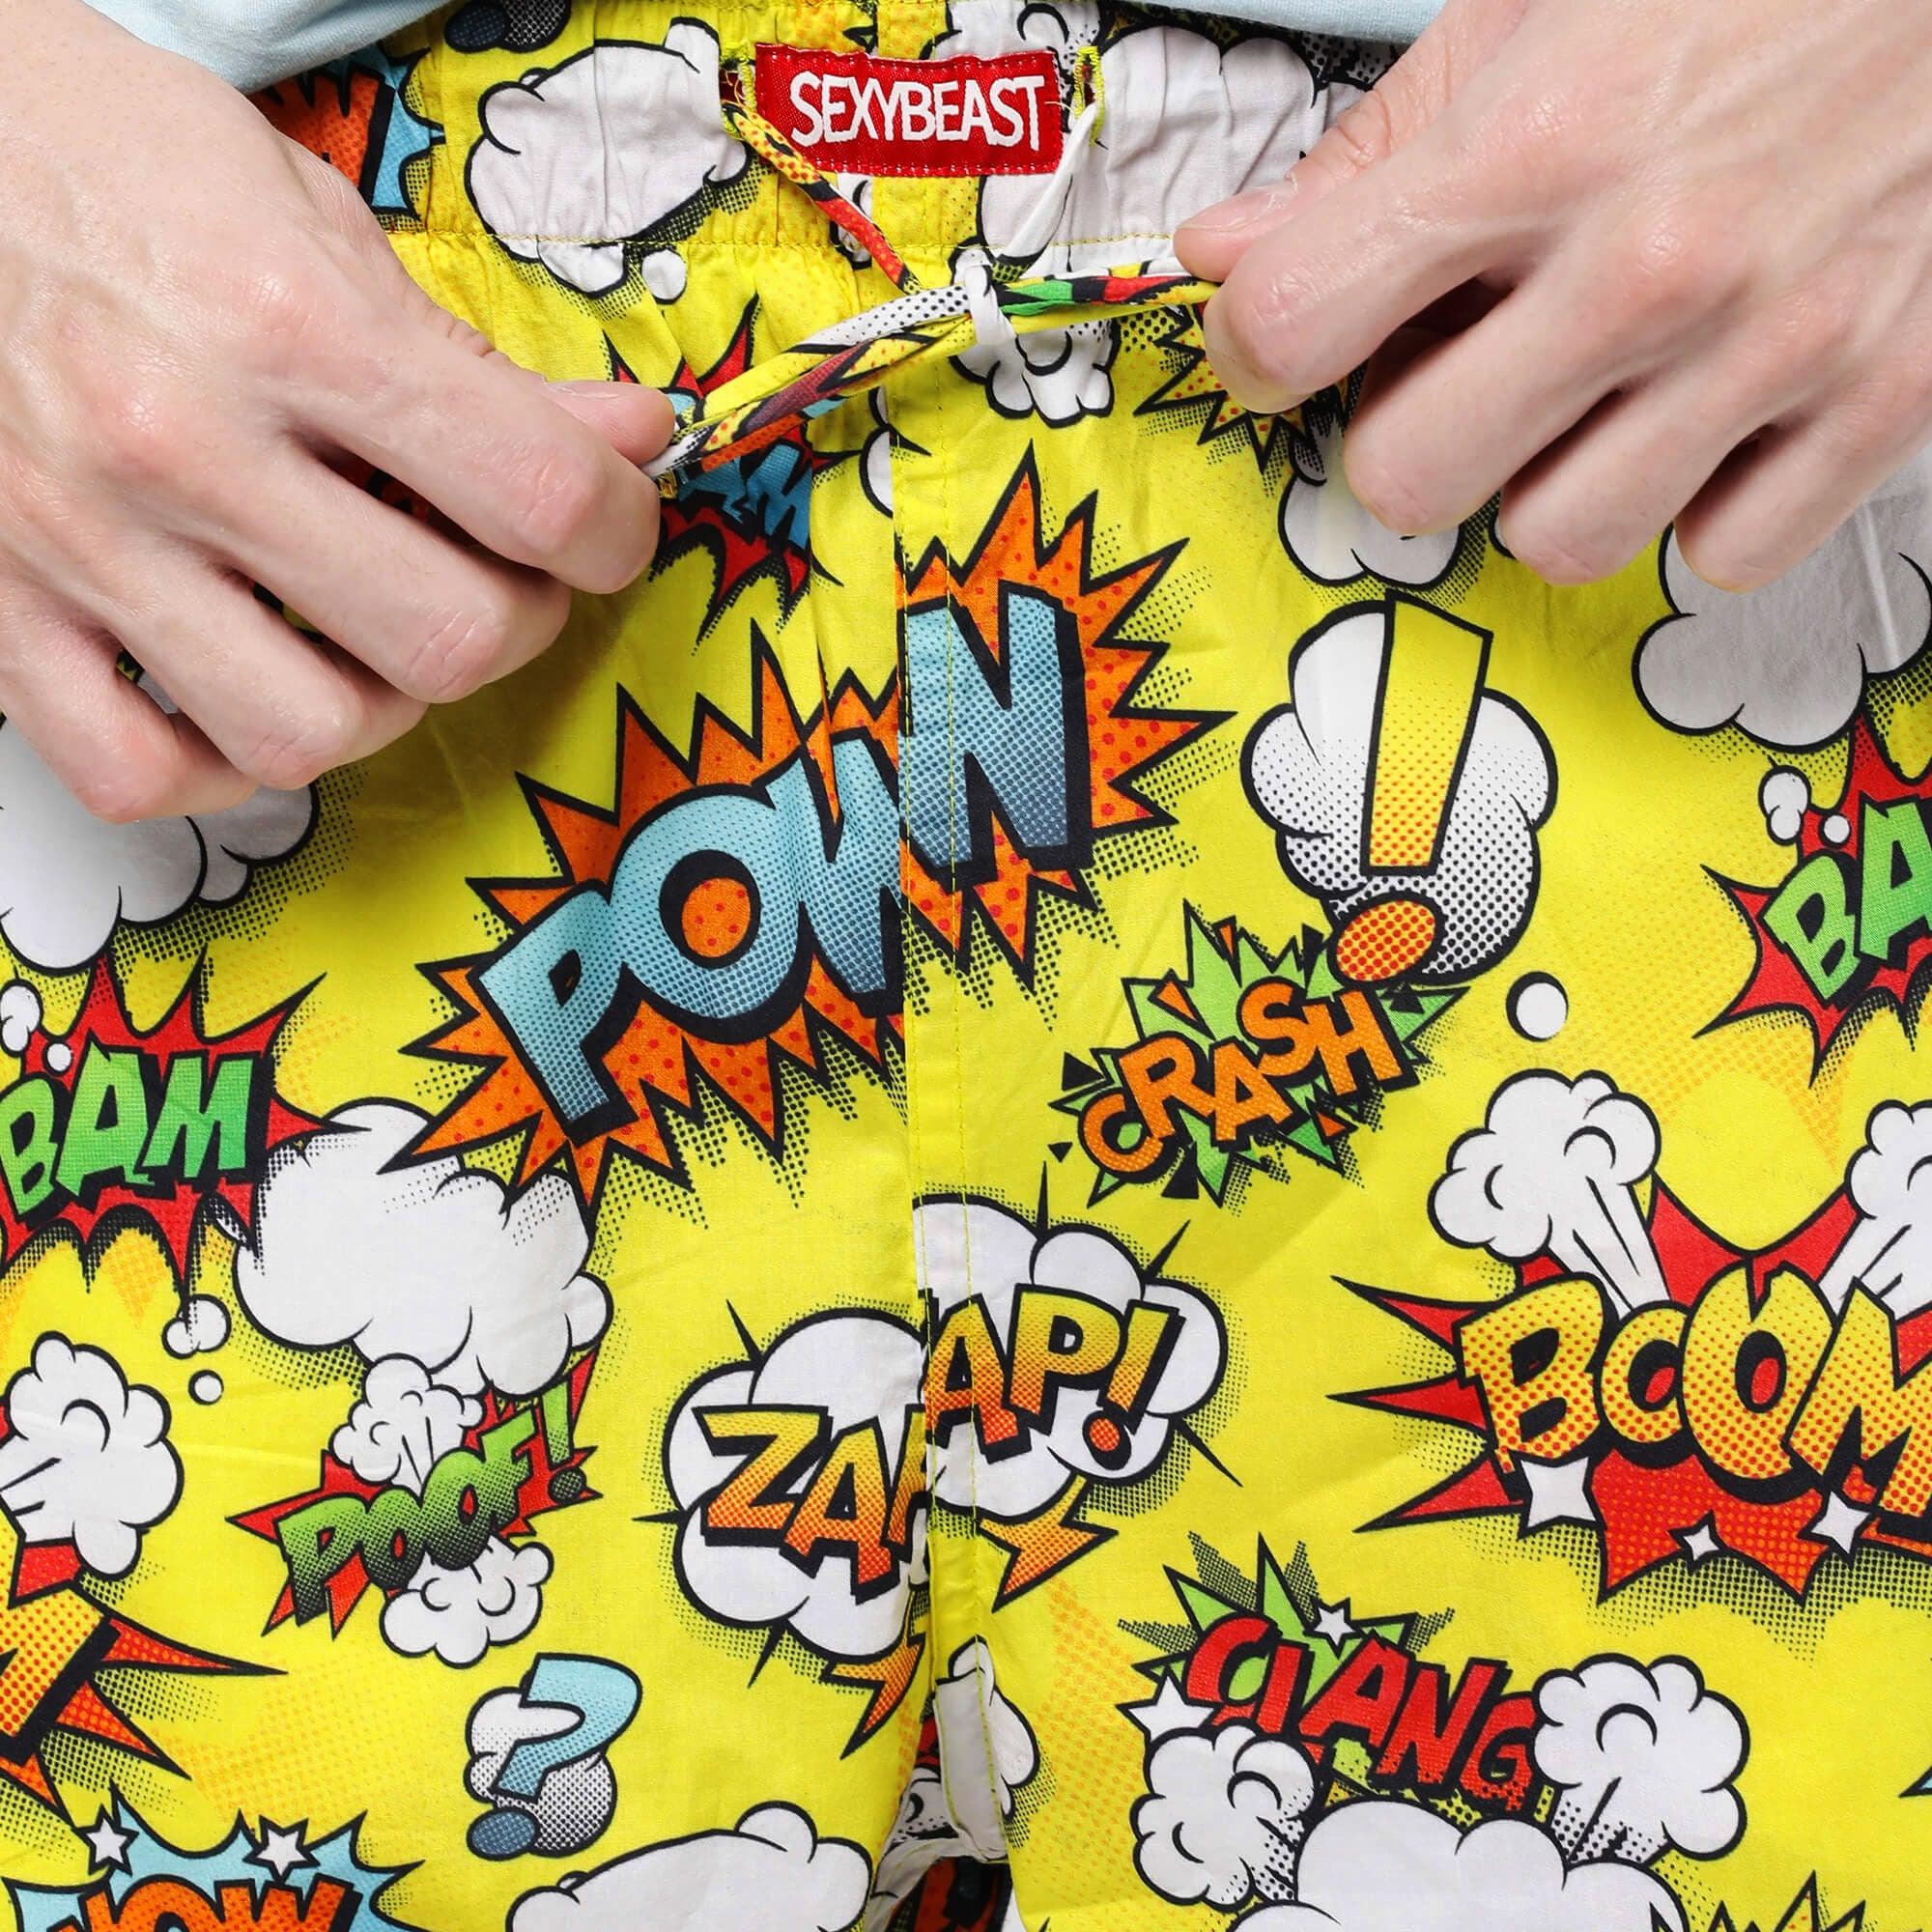 Comic Pow Cool Funky Stylish Printed Pyjamas for Men